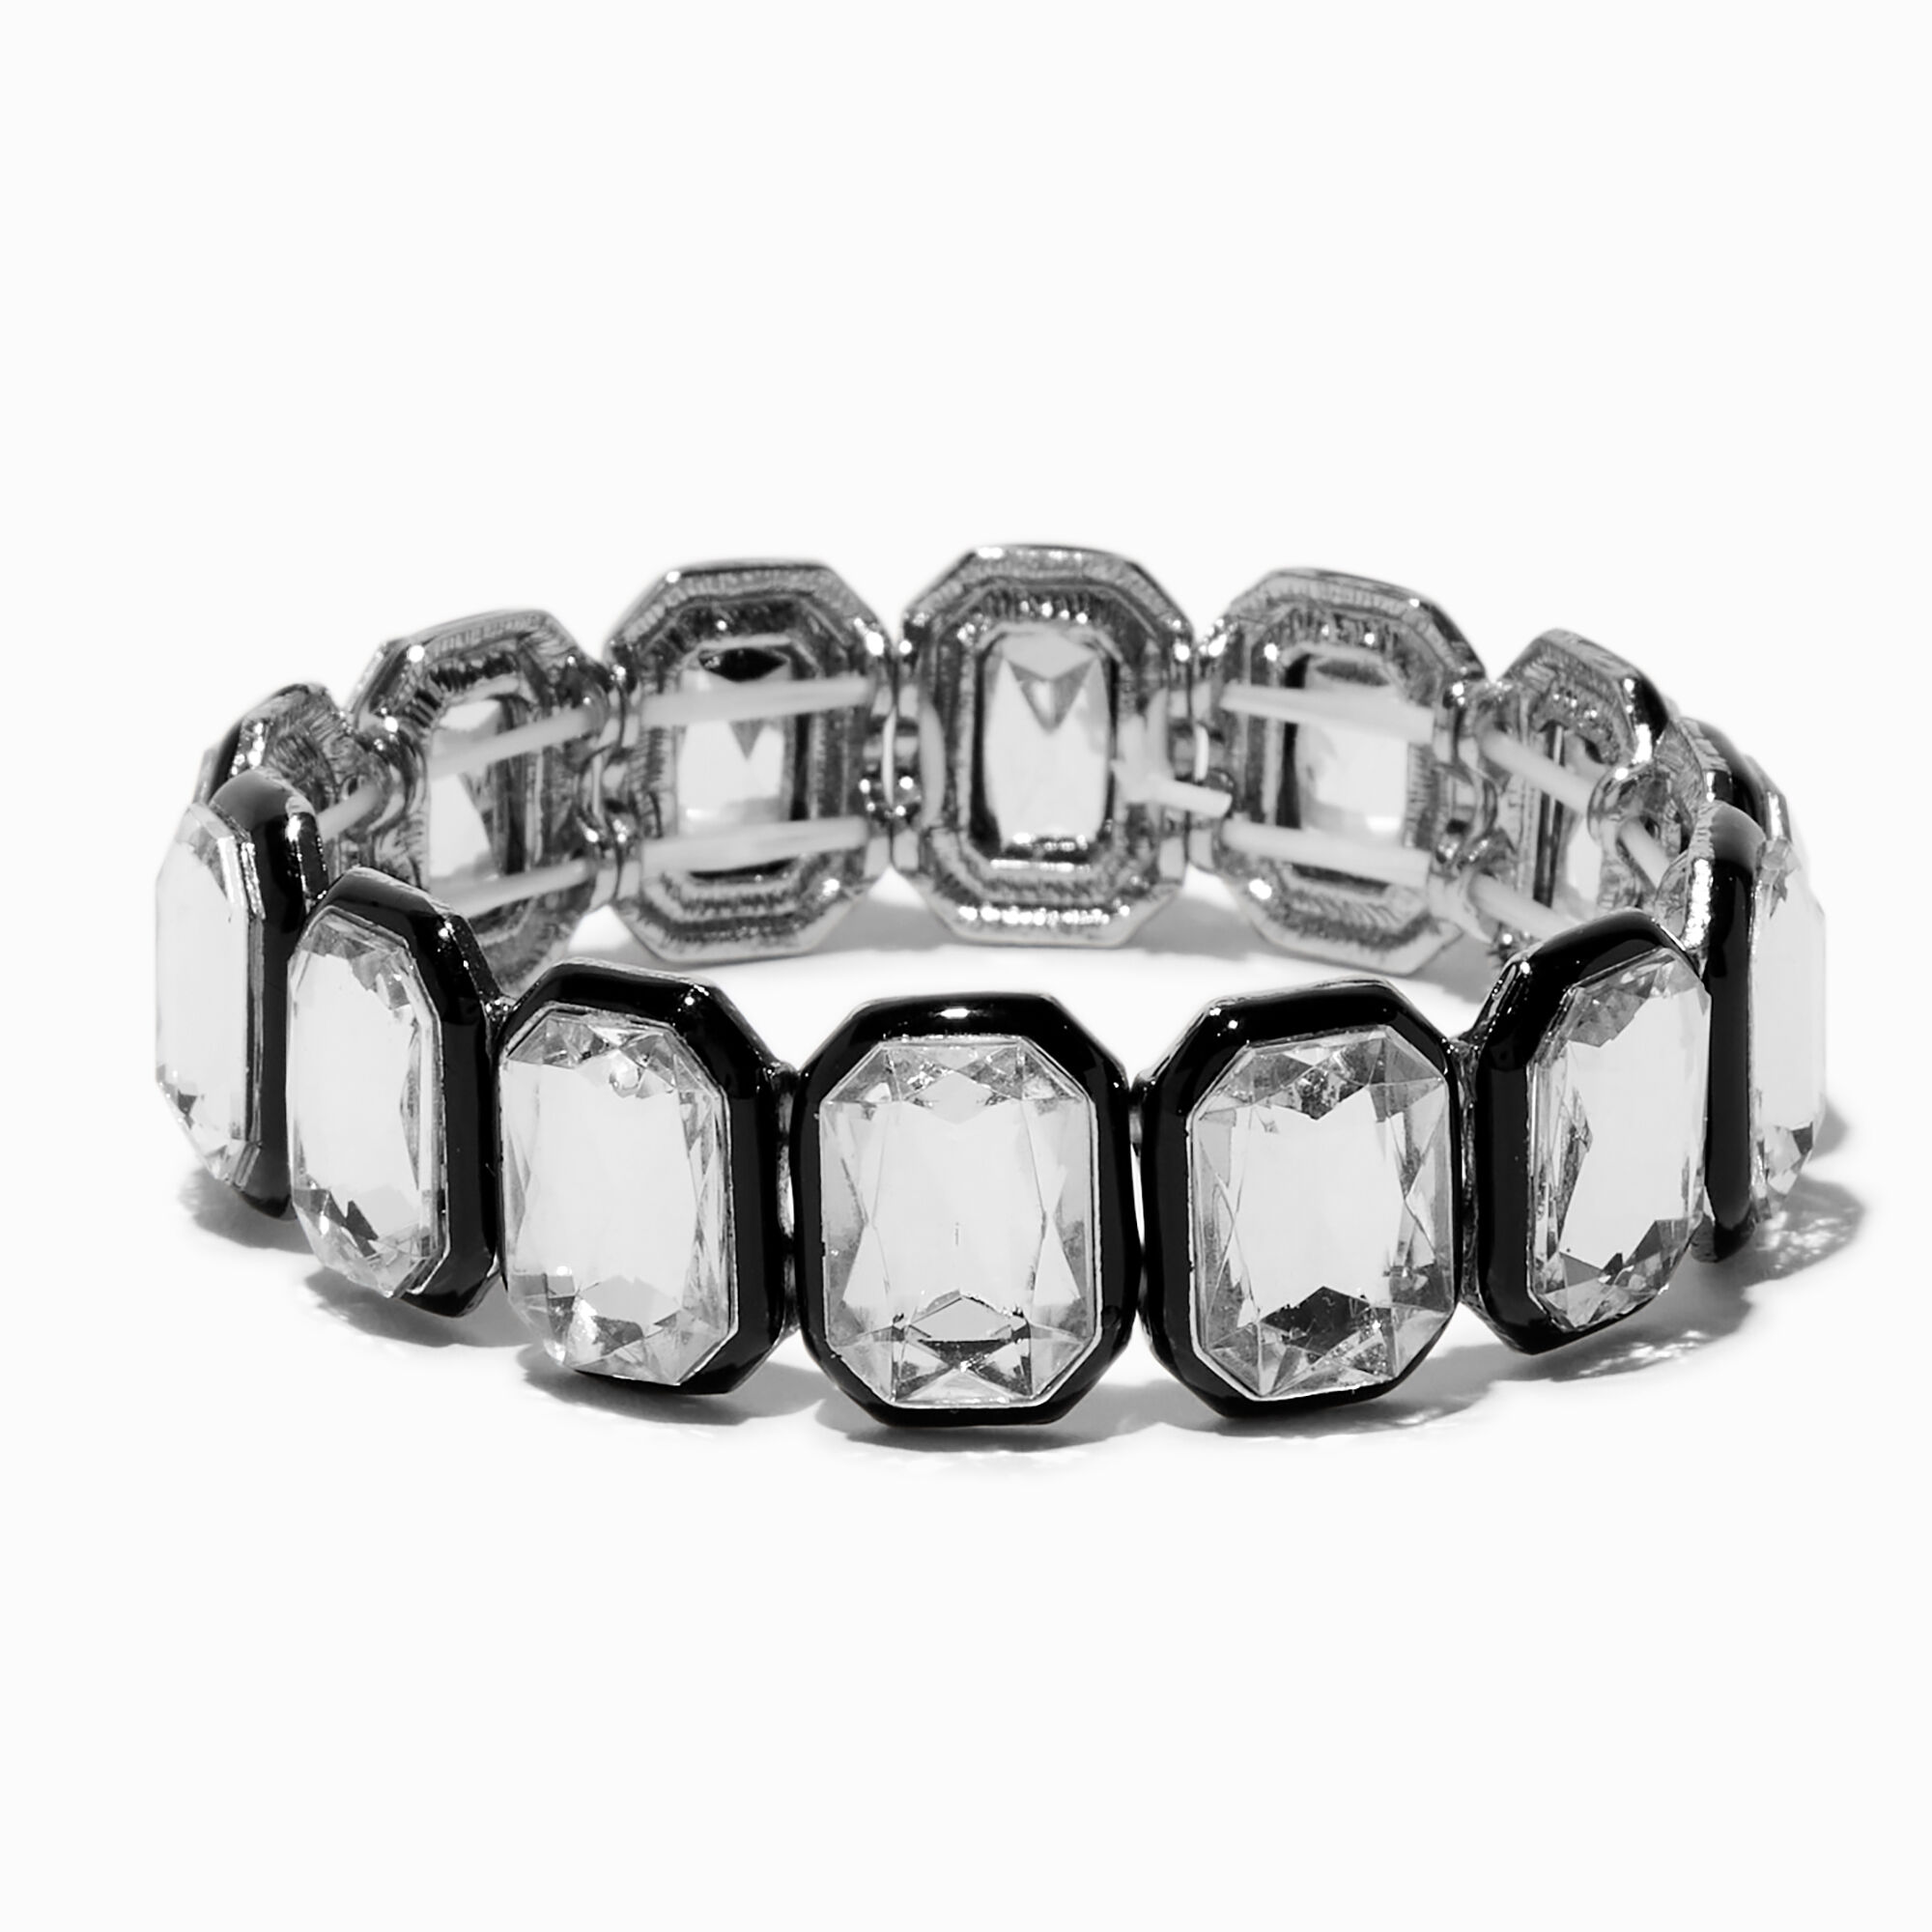 View Claires Enamel Crystal Gemstone Stretch Bracelet Black information